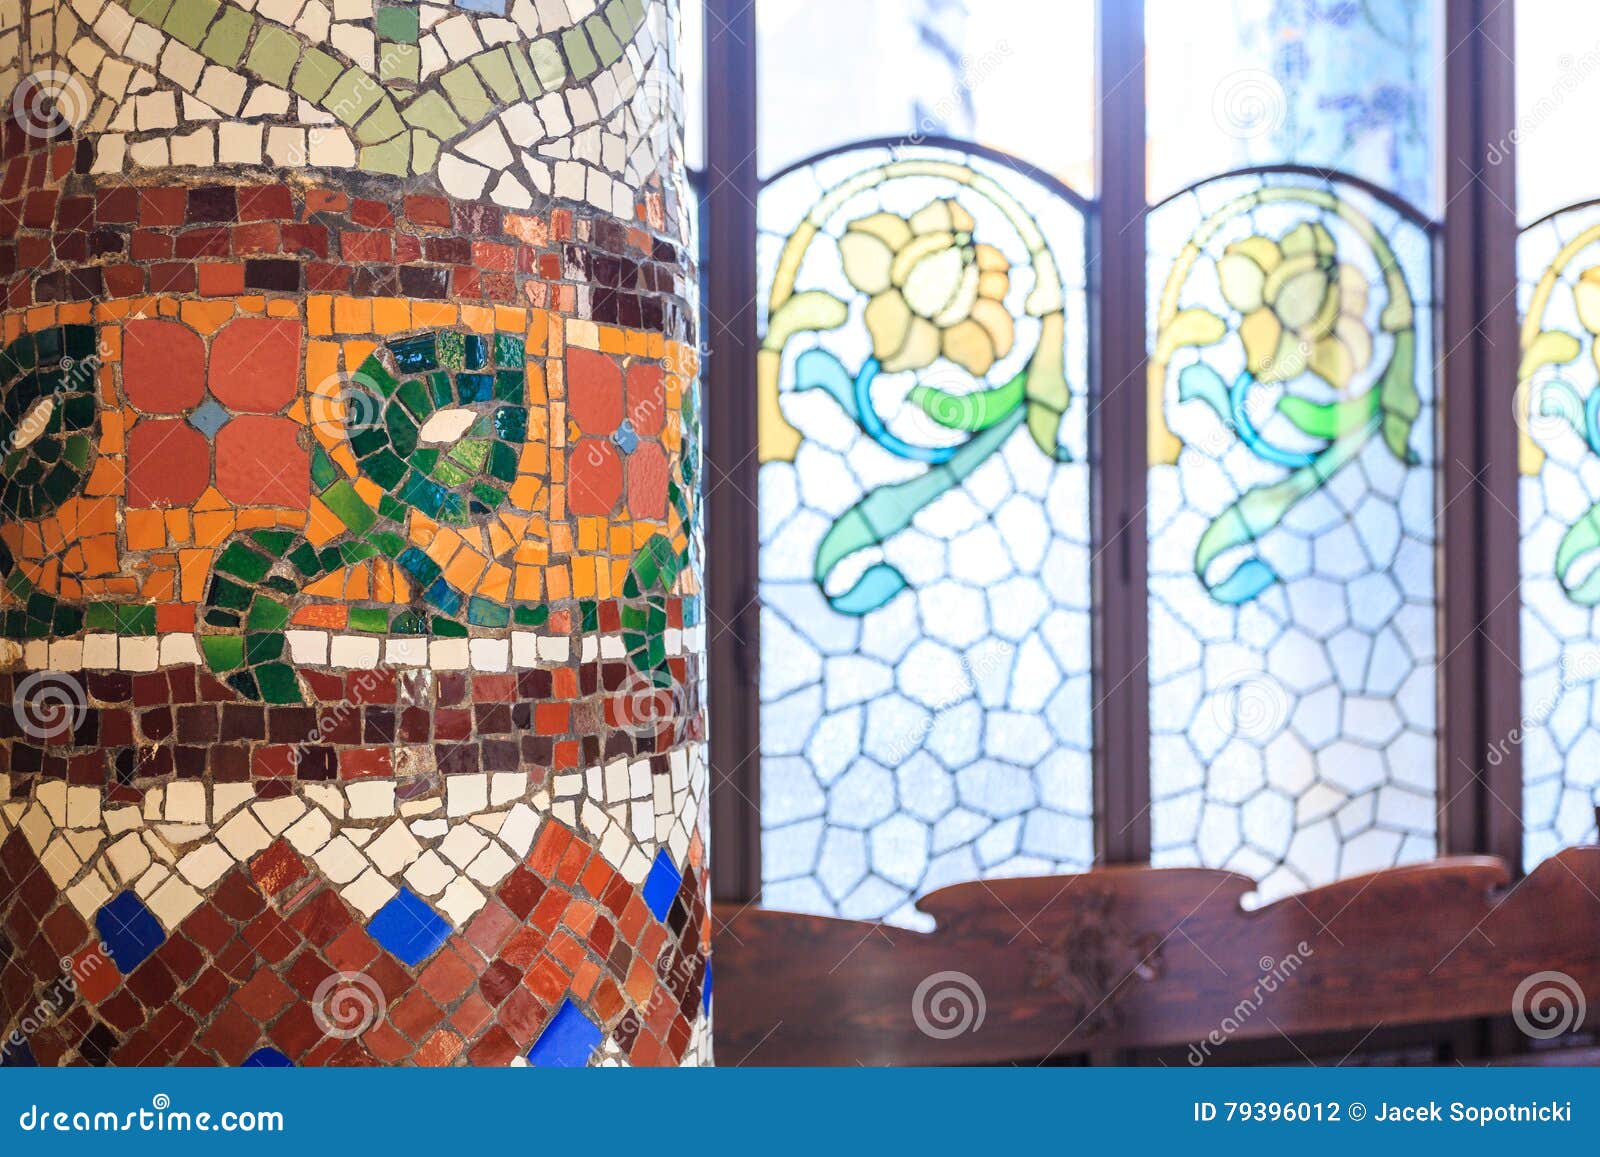 mosaic and stained glass, palau de la musica, barcelona, spain